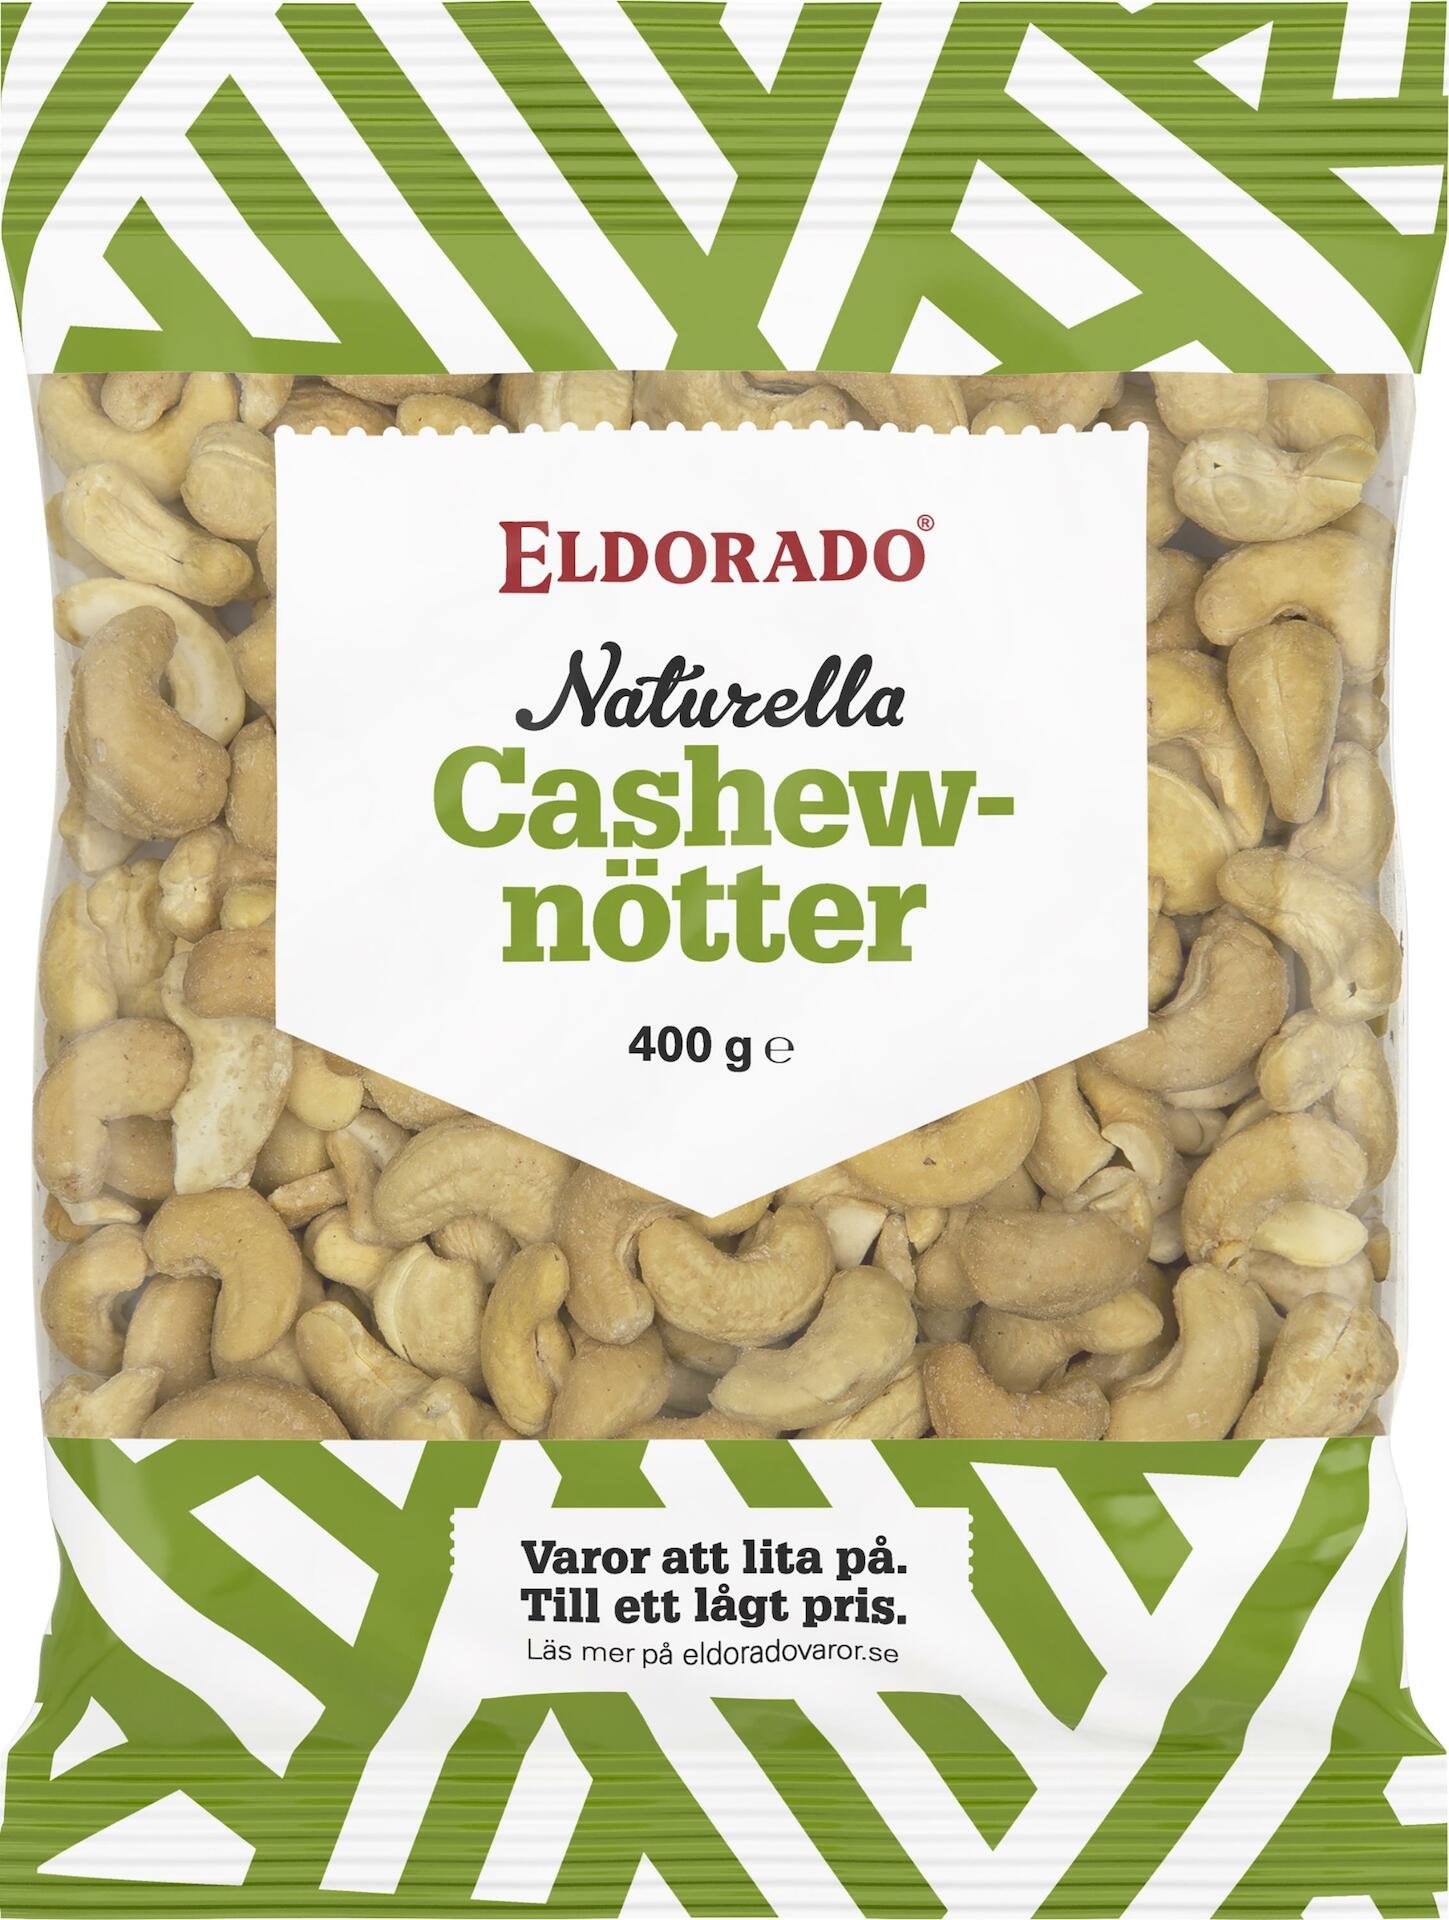 Eldorado Cashew Naturella 400g